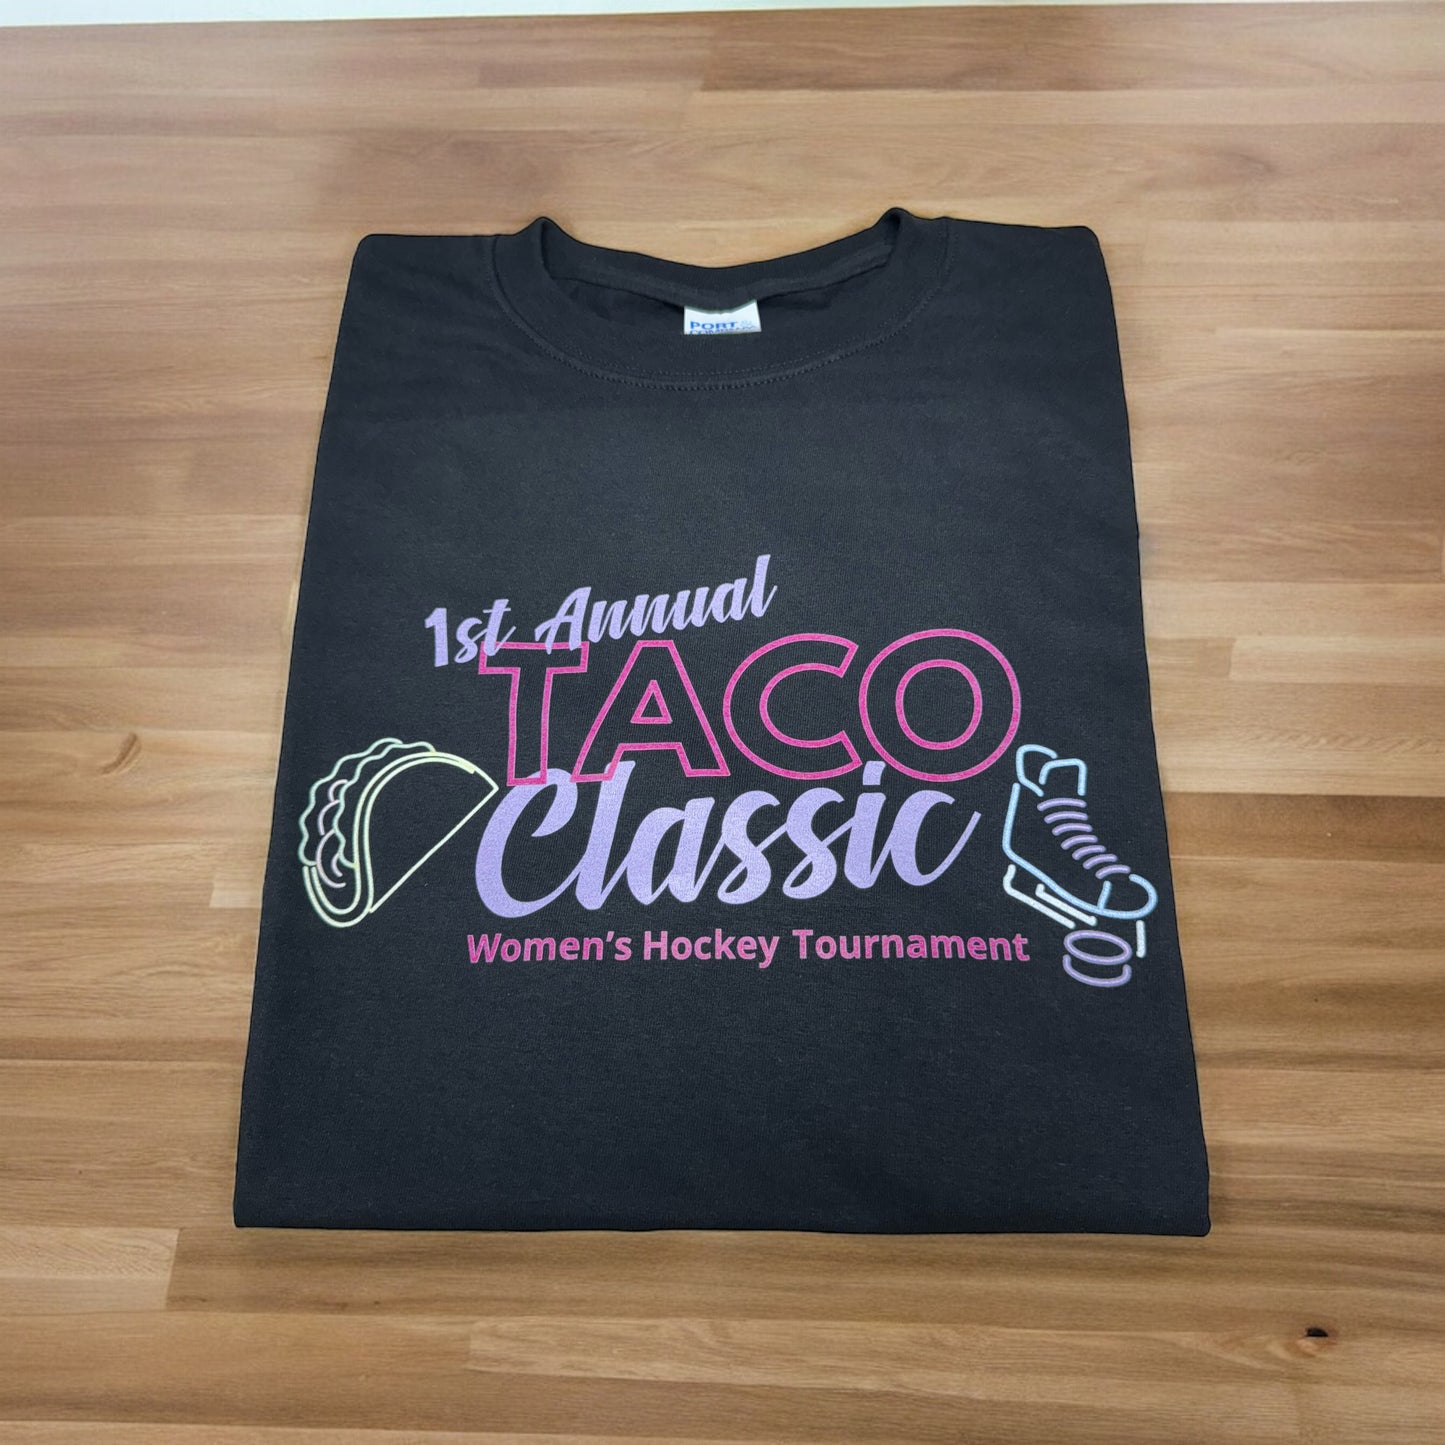 Taco classic Tournament Shirts